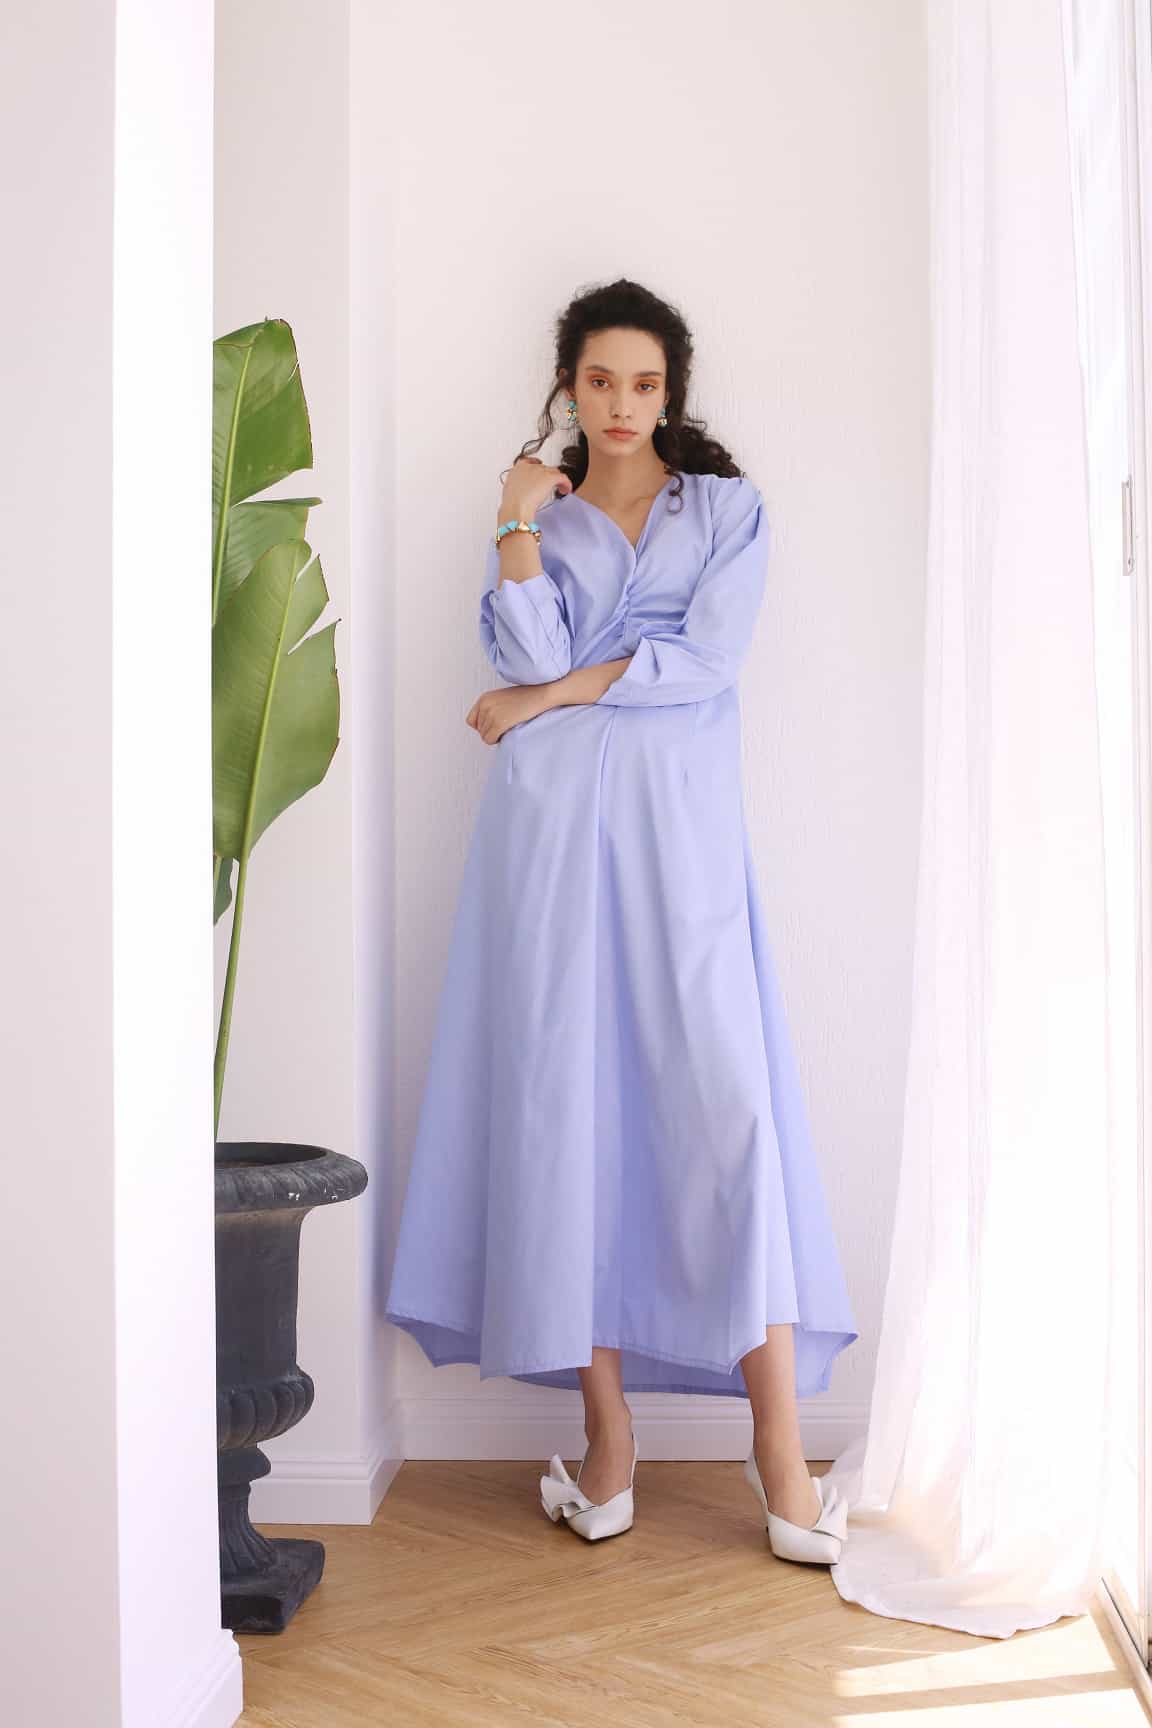 Emiratska luksuzna modna marka PEARLA lansira kolekciju nadrealista u suradnji s Villom AUMÈDAN i Vhernier Milano